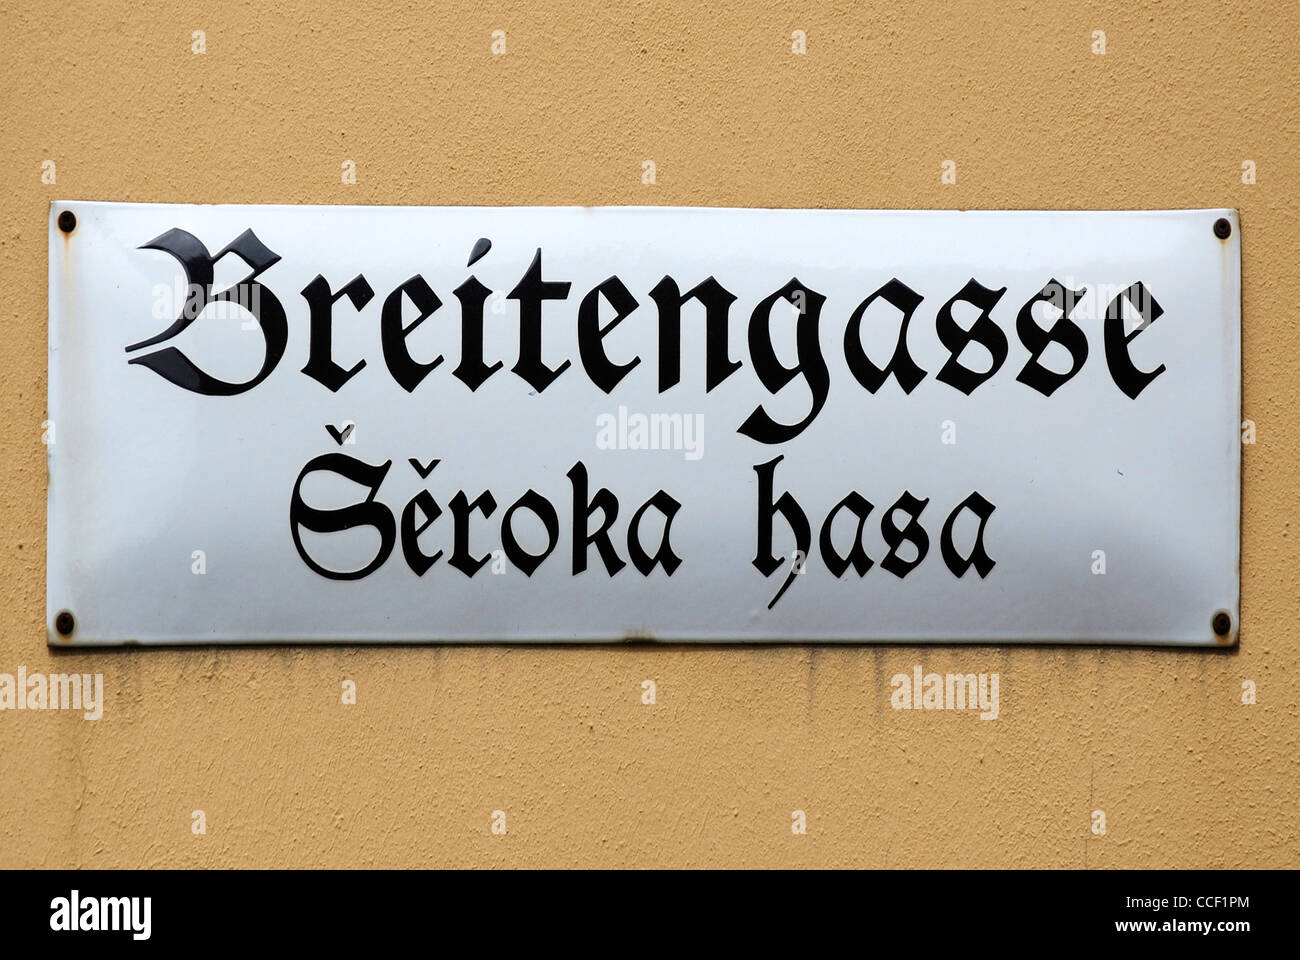 Street sign of Bautzen in German and Sorbian language at the Breitengasse - Seroka hasa. Stock Photo